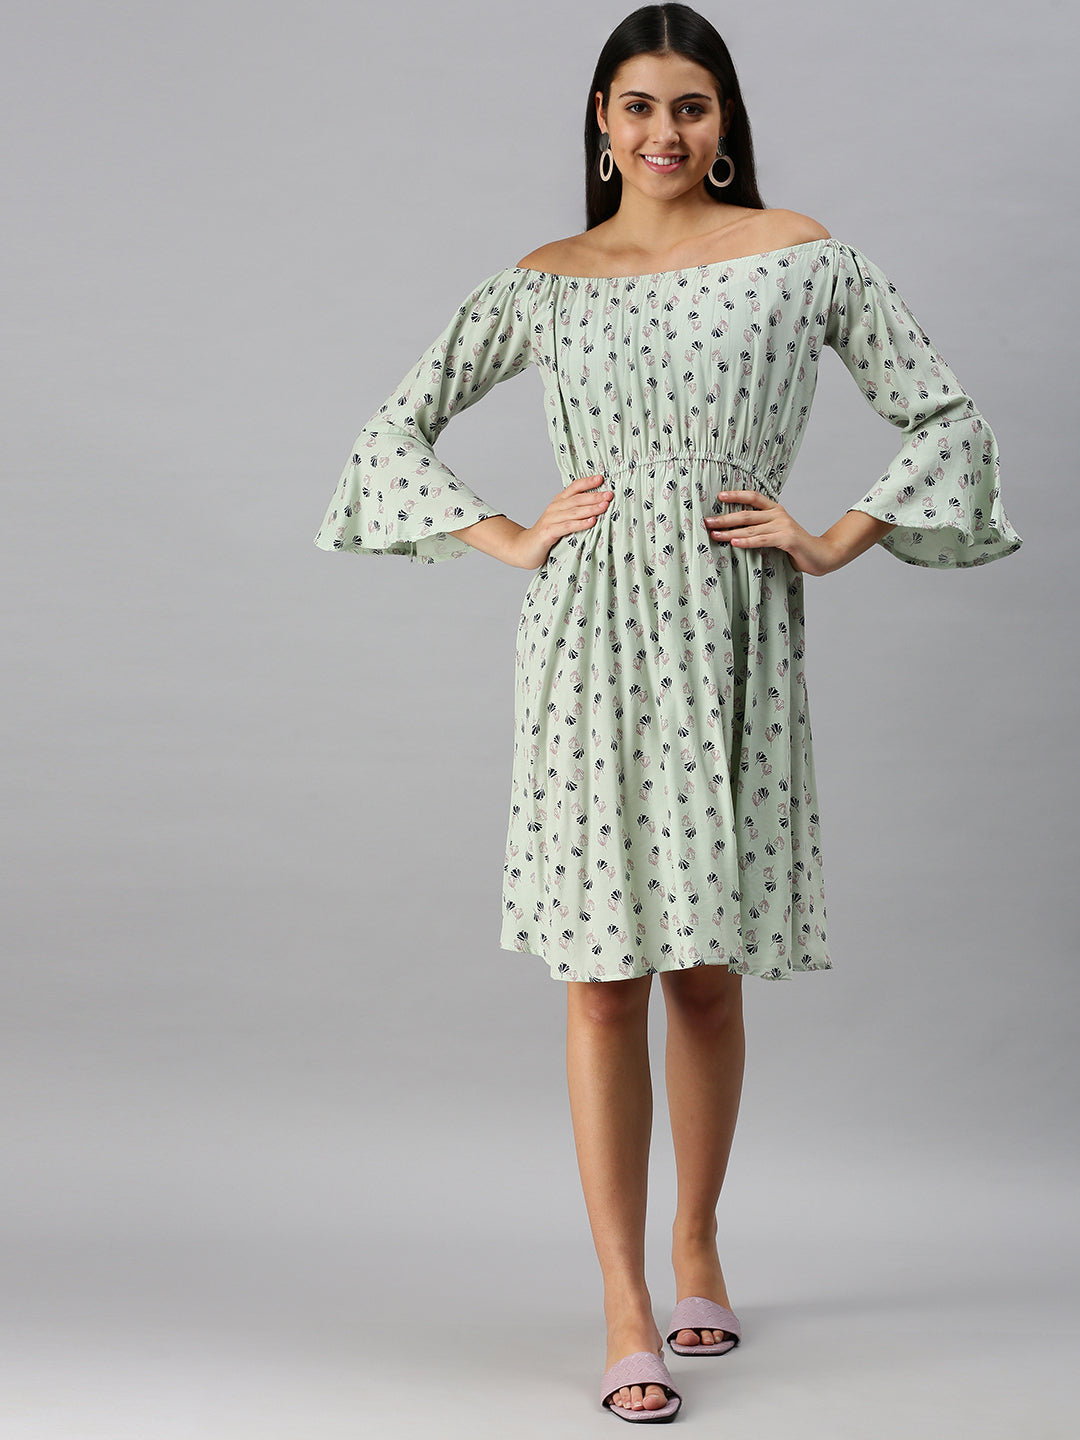 Women's A-Line Green Printed Dress